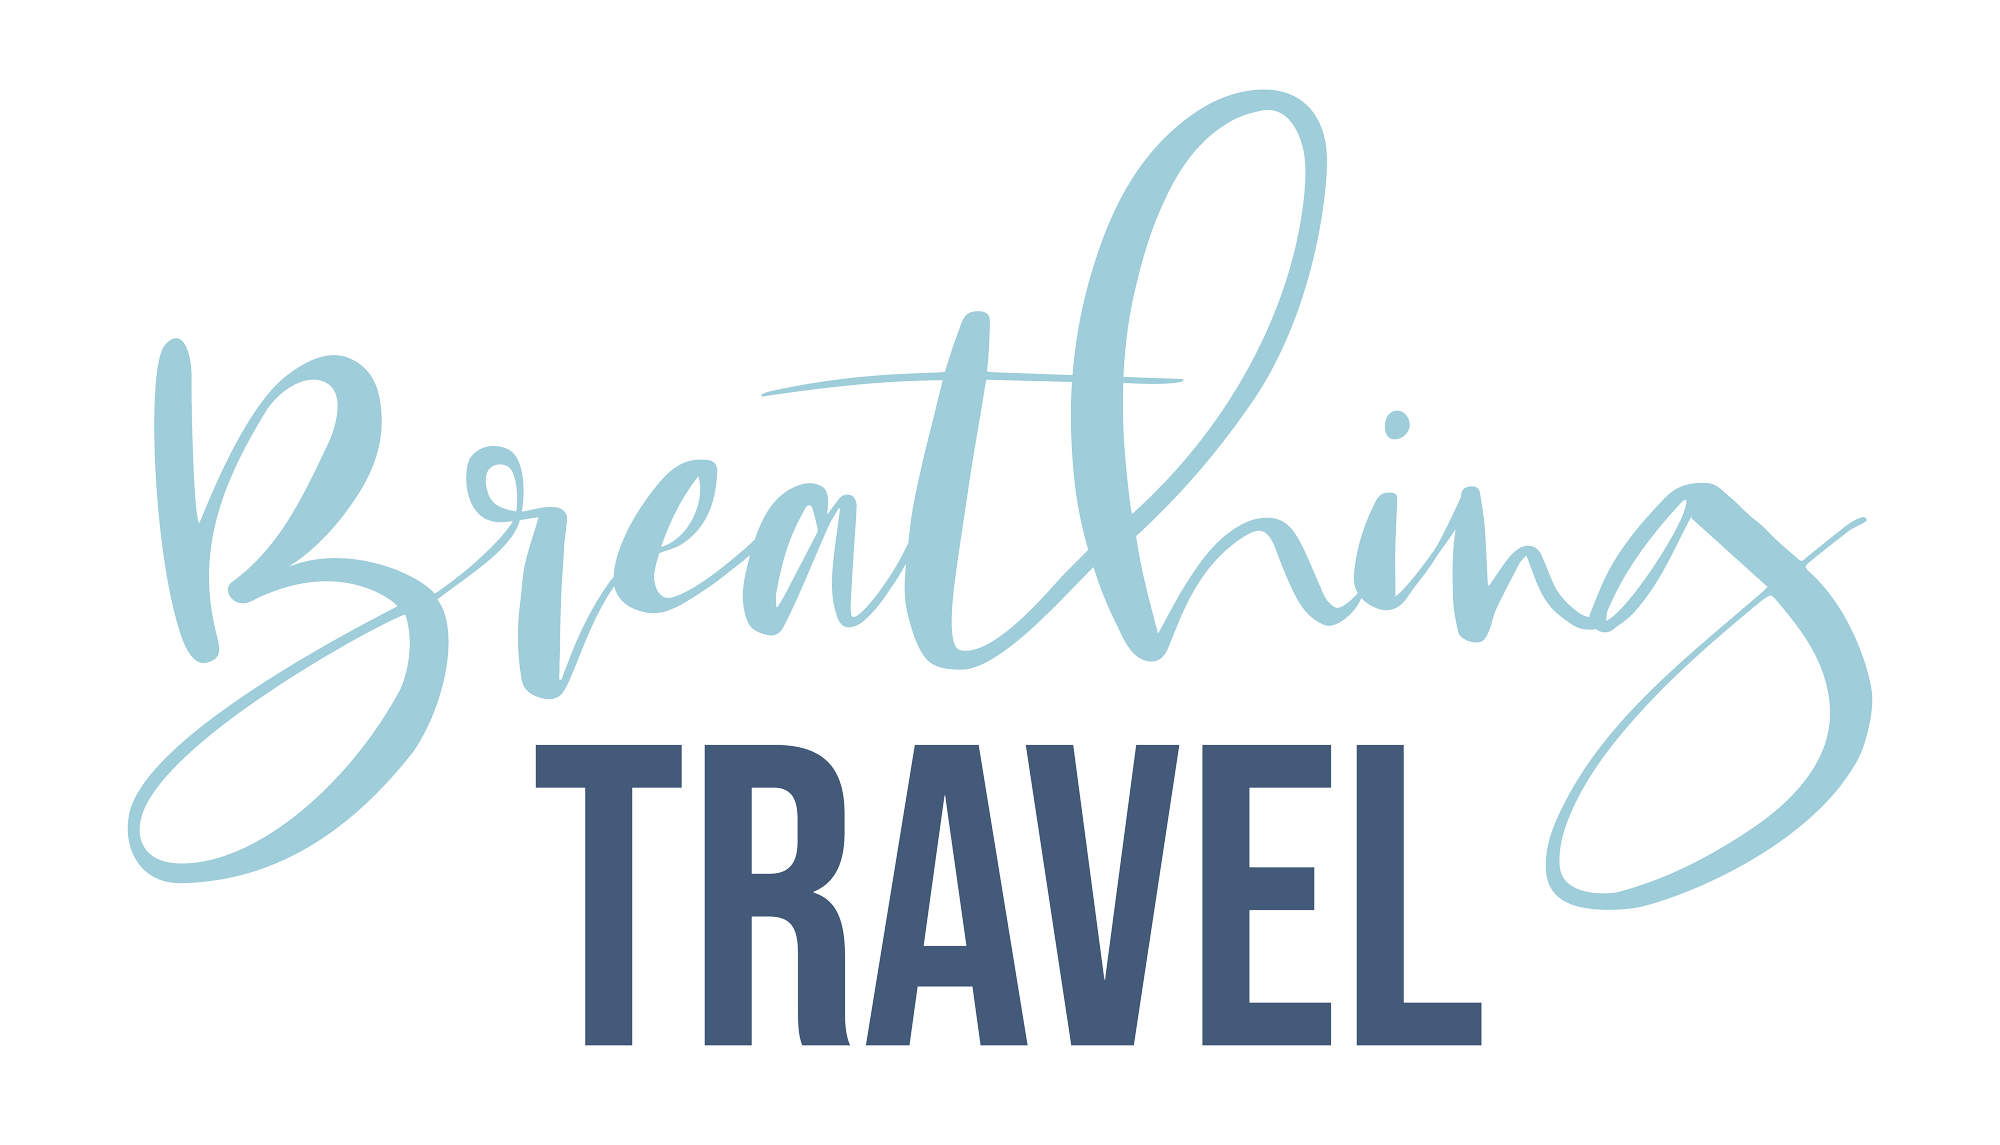 Breathing Travel | Sand Free Beach Towels